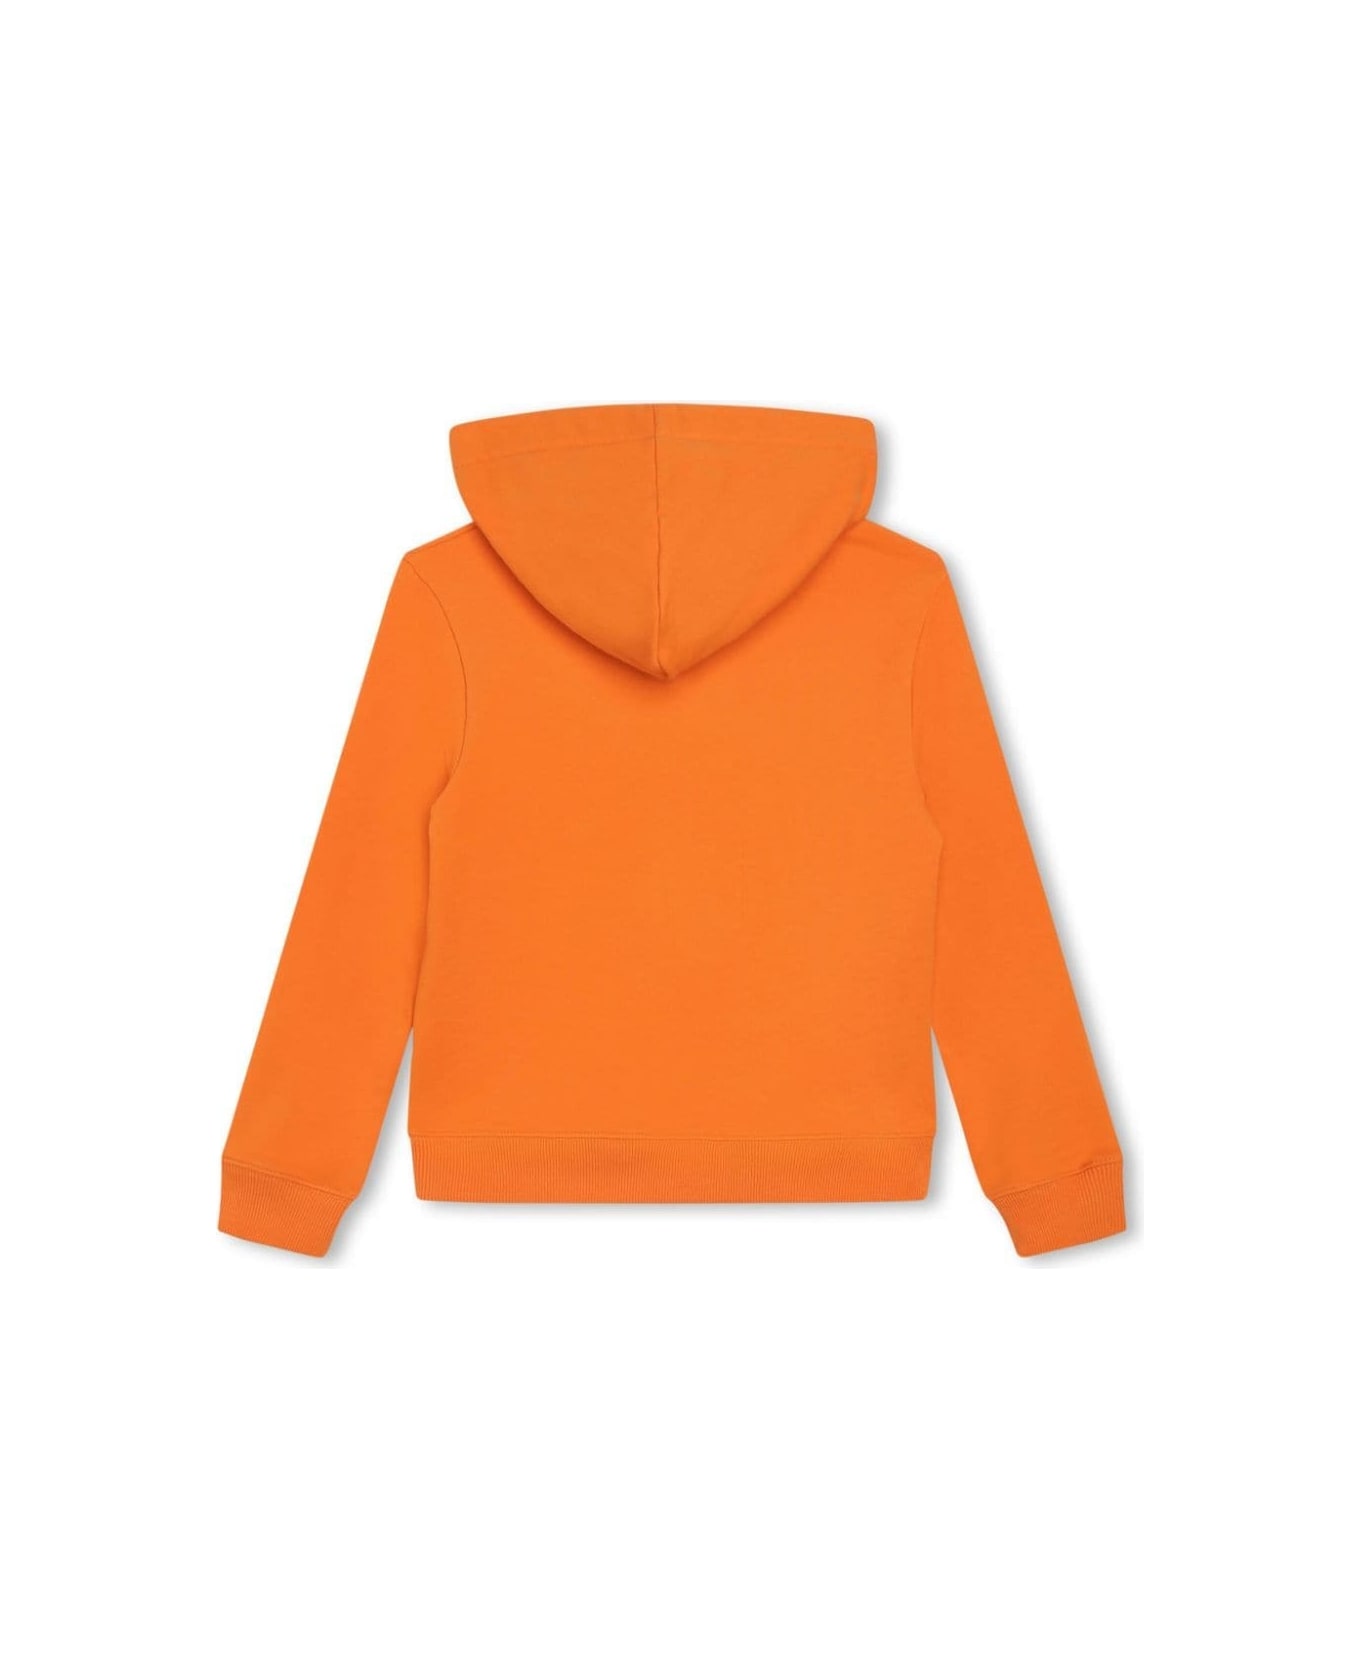 Lanvin Orange Hoodie With Lanvin "curb" Logo - Orange